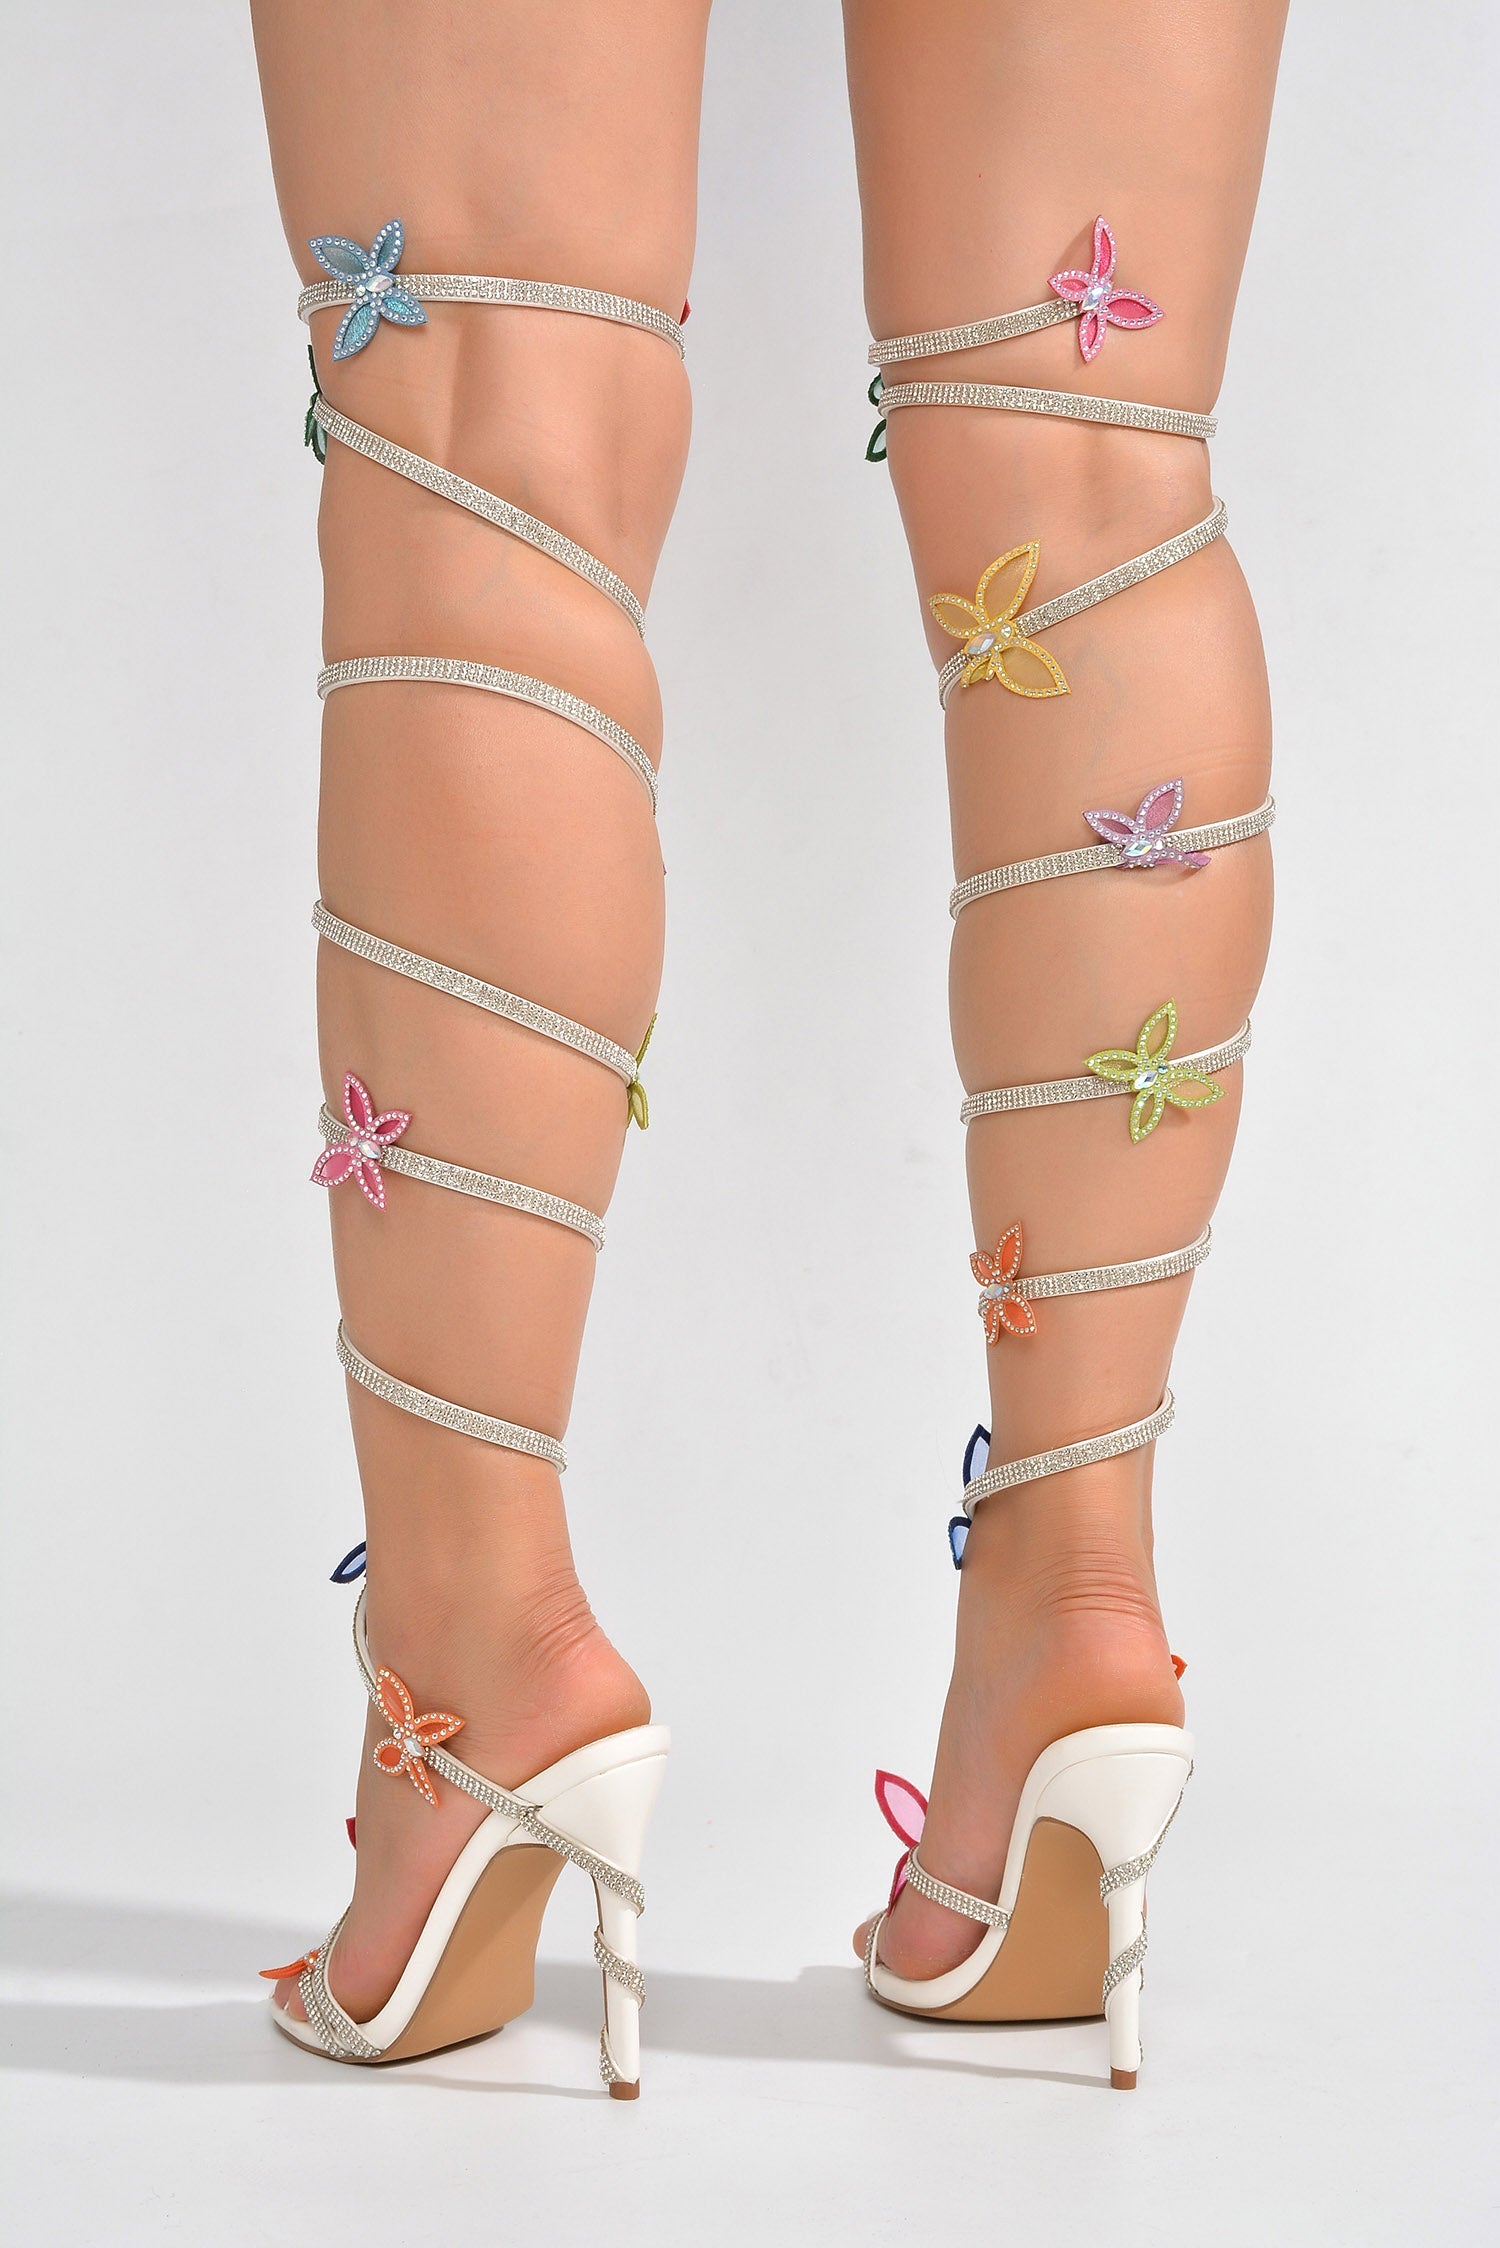 Fairytales Diamante Wrap Around Stiletto High Heels